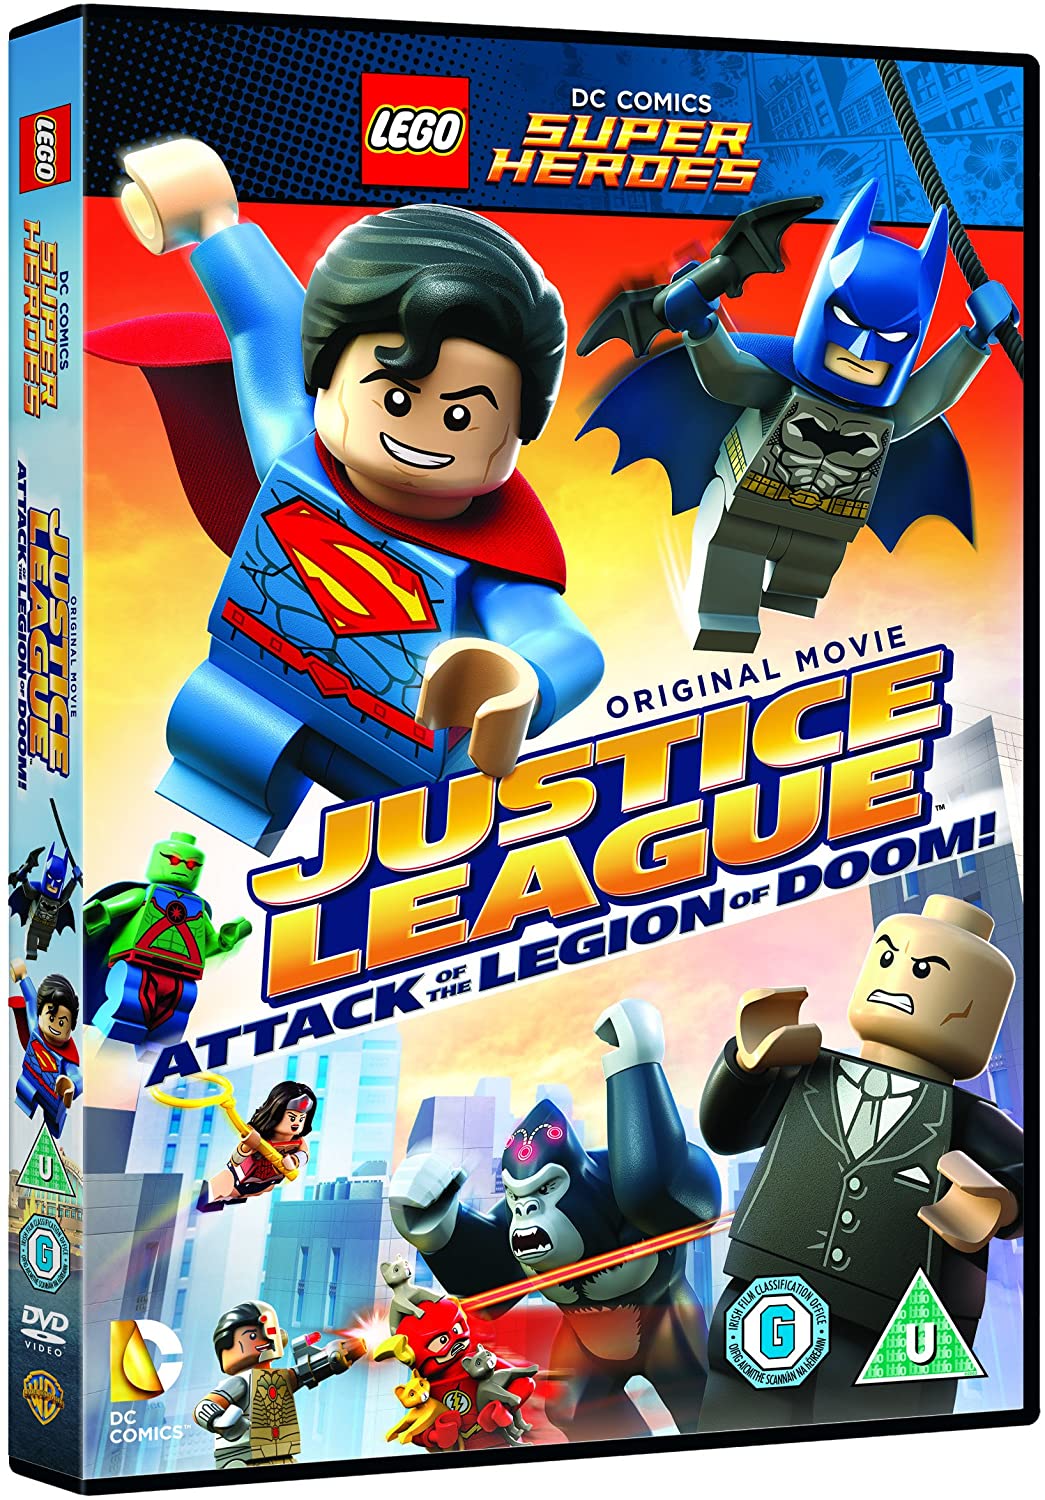 Lego: Justice League: Angriff der Legion of Doom! [2015] – Animation [DVD]